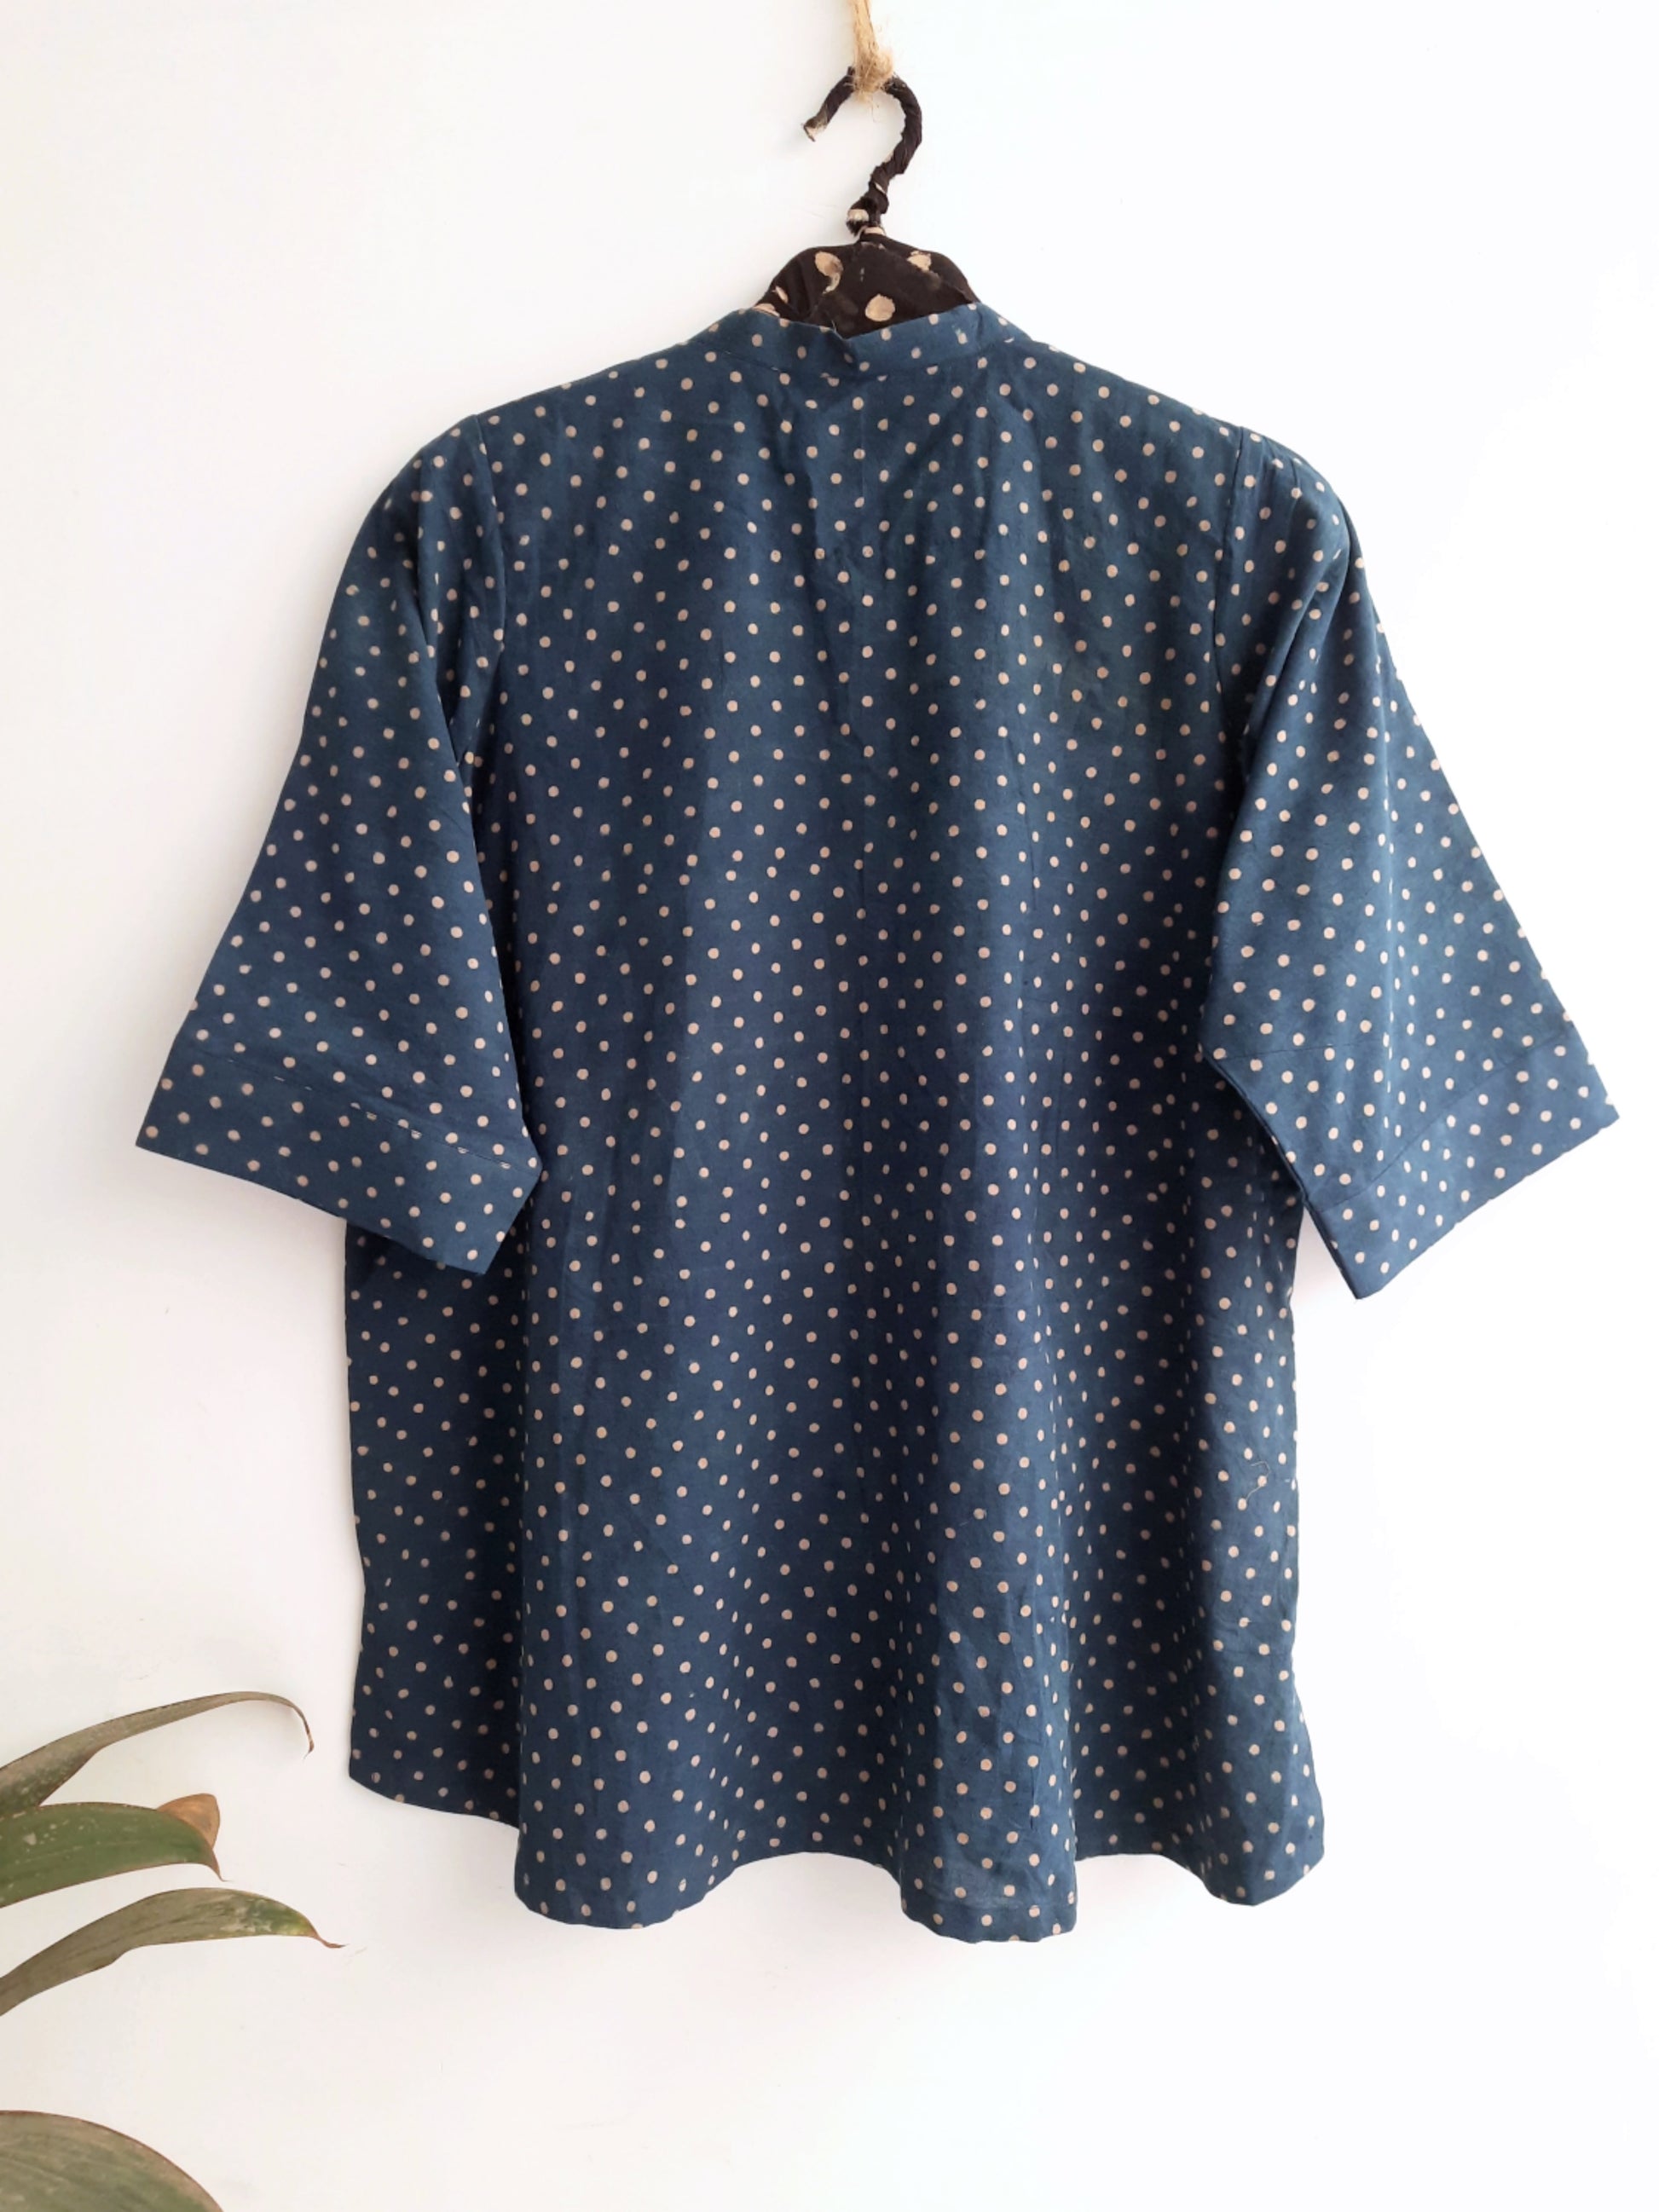 Polka dots women's shirt in indigo, Indigo dyed polka dots shirt, Polka dots shirt